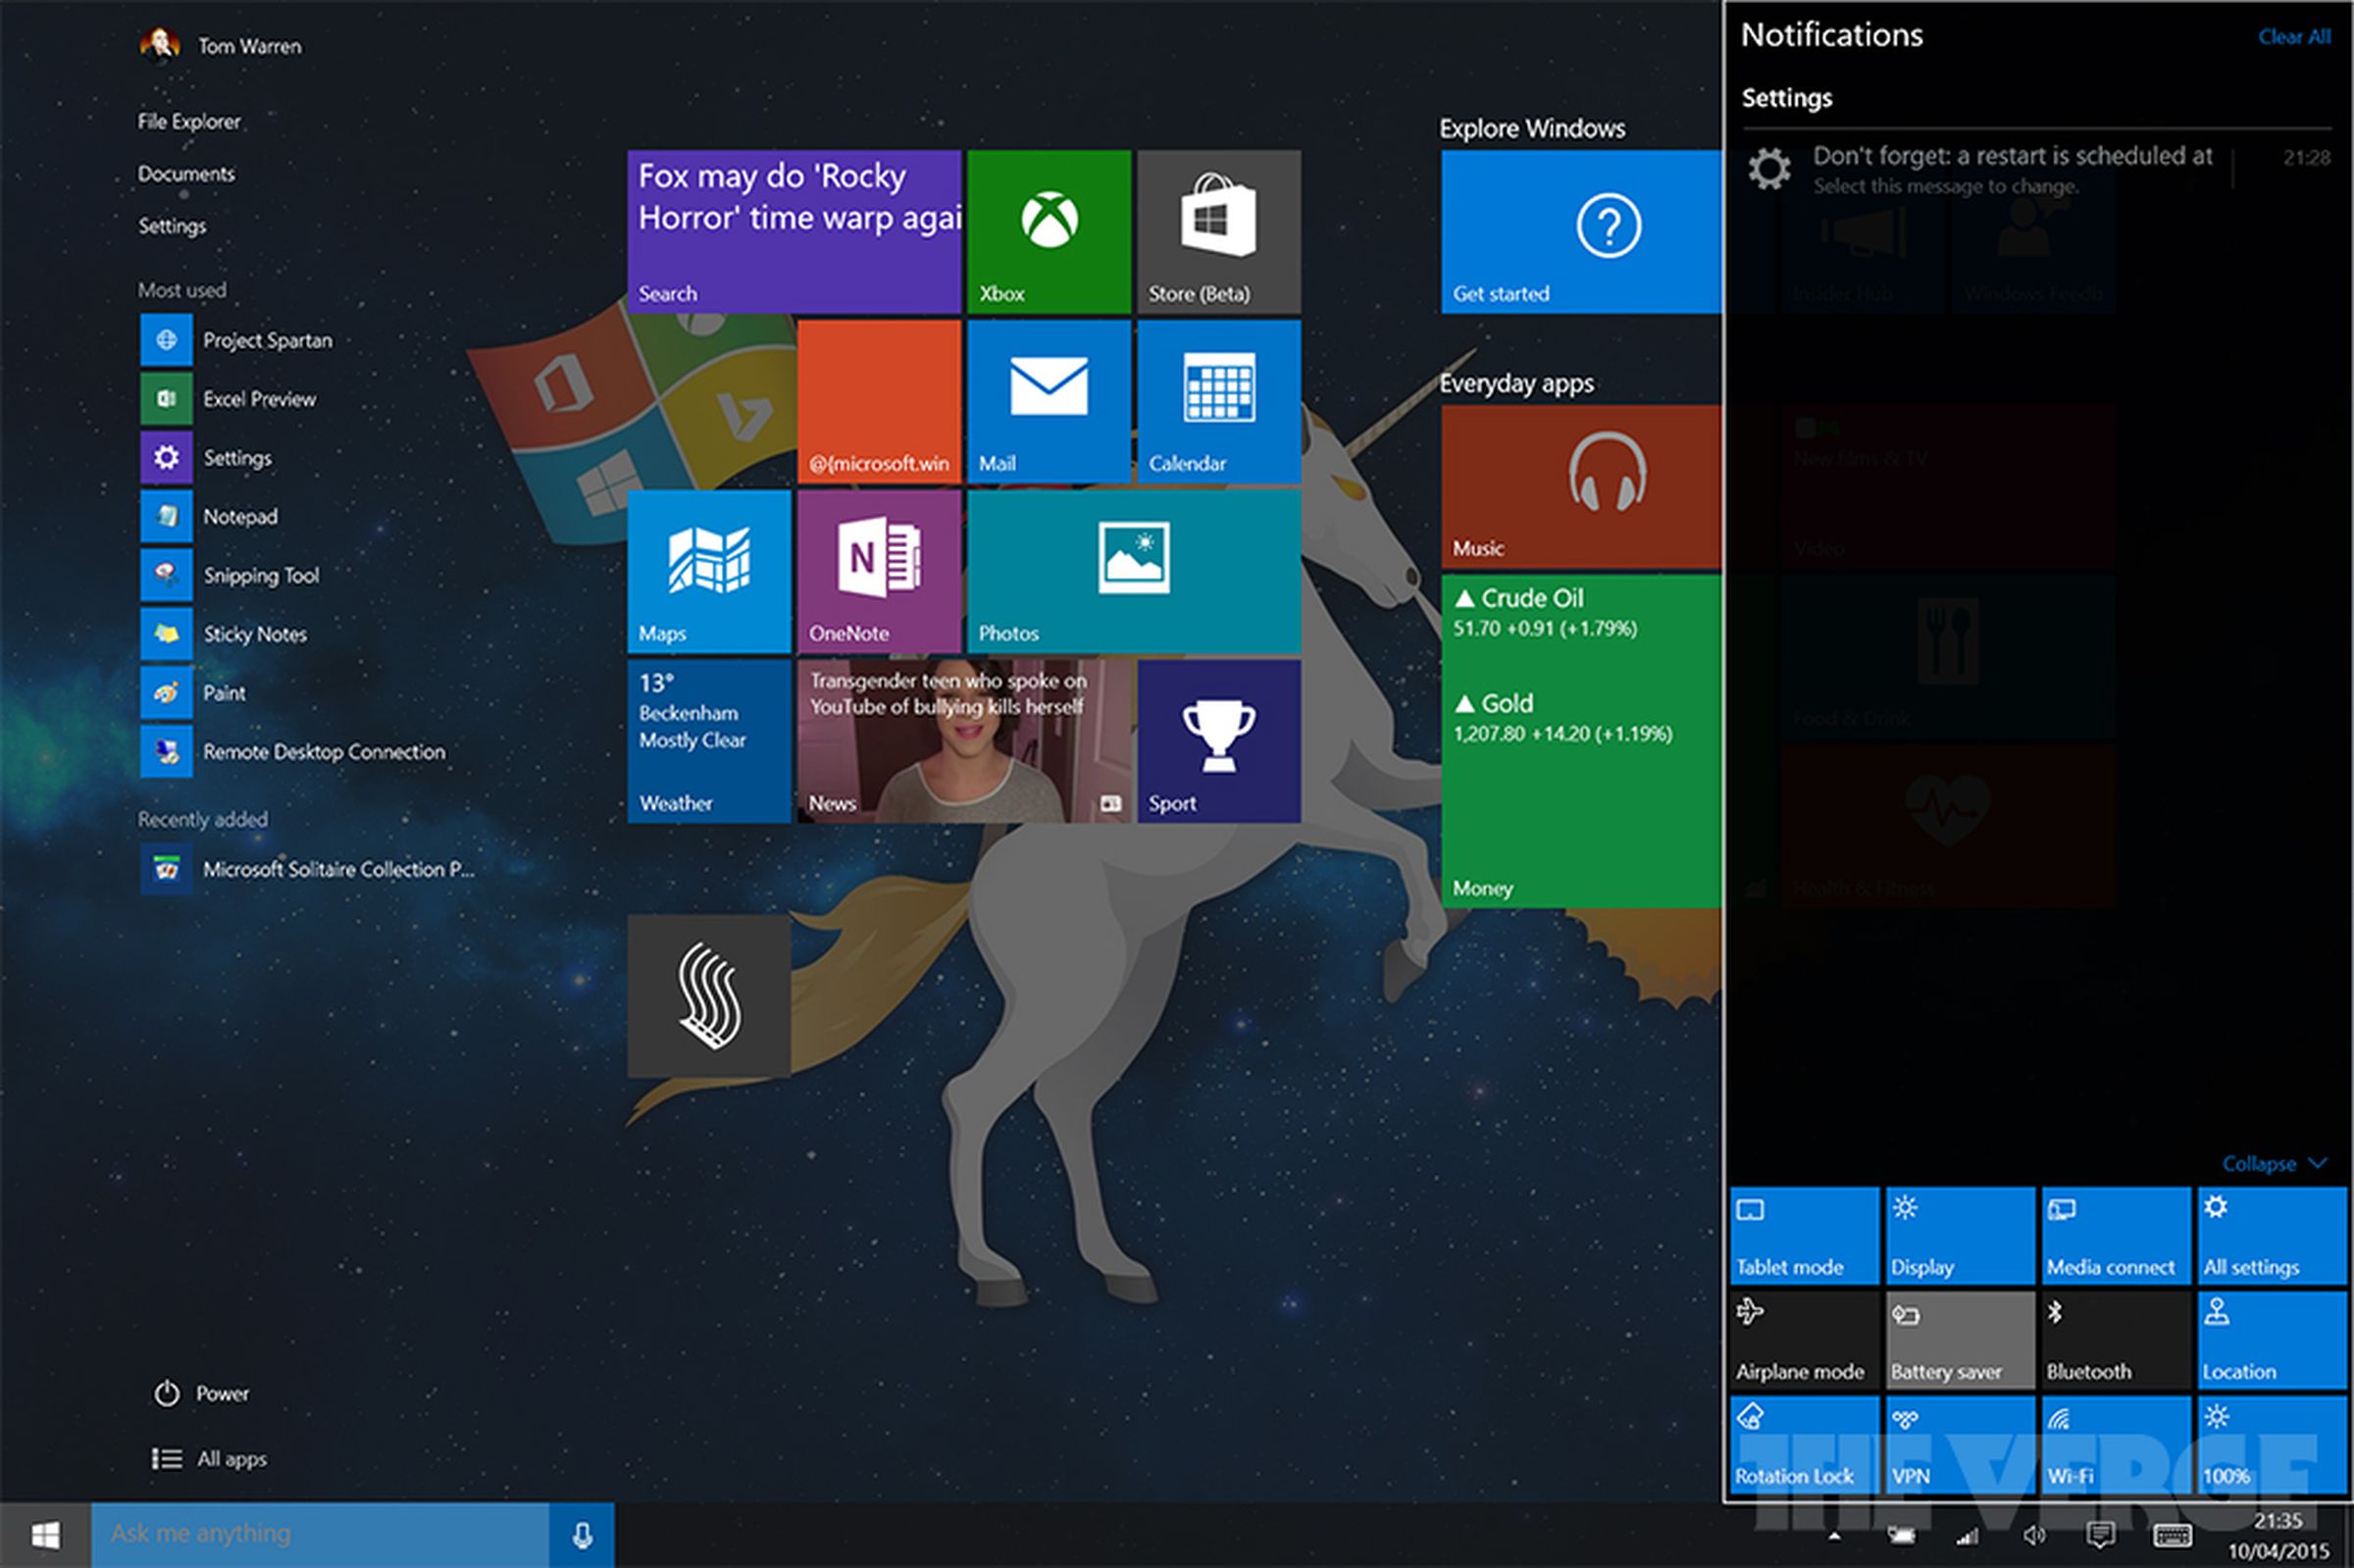 Windows 10 touch mode improvements